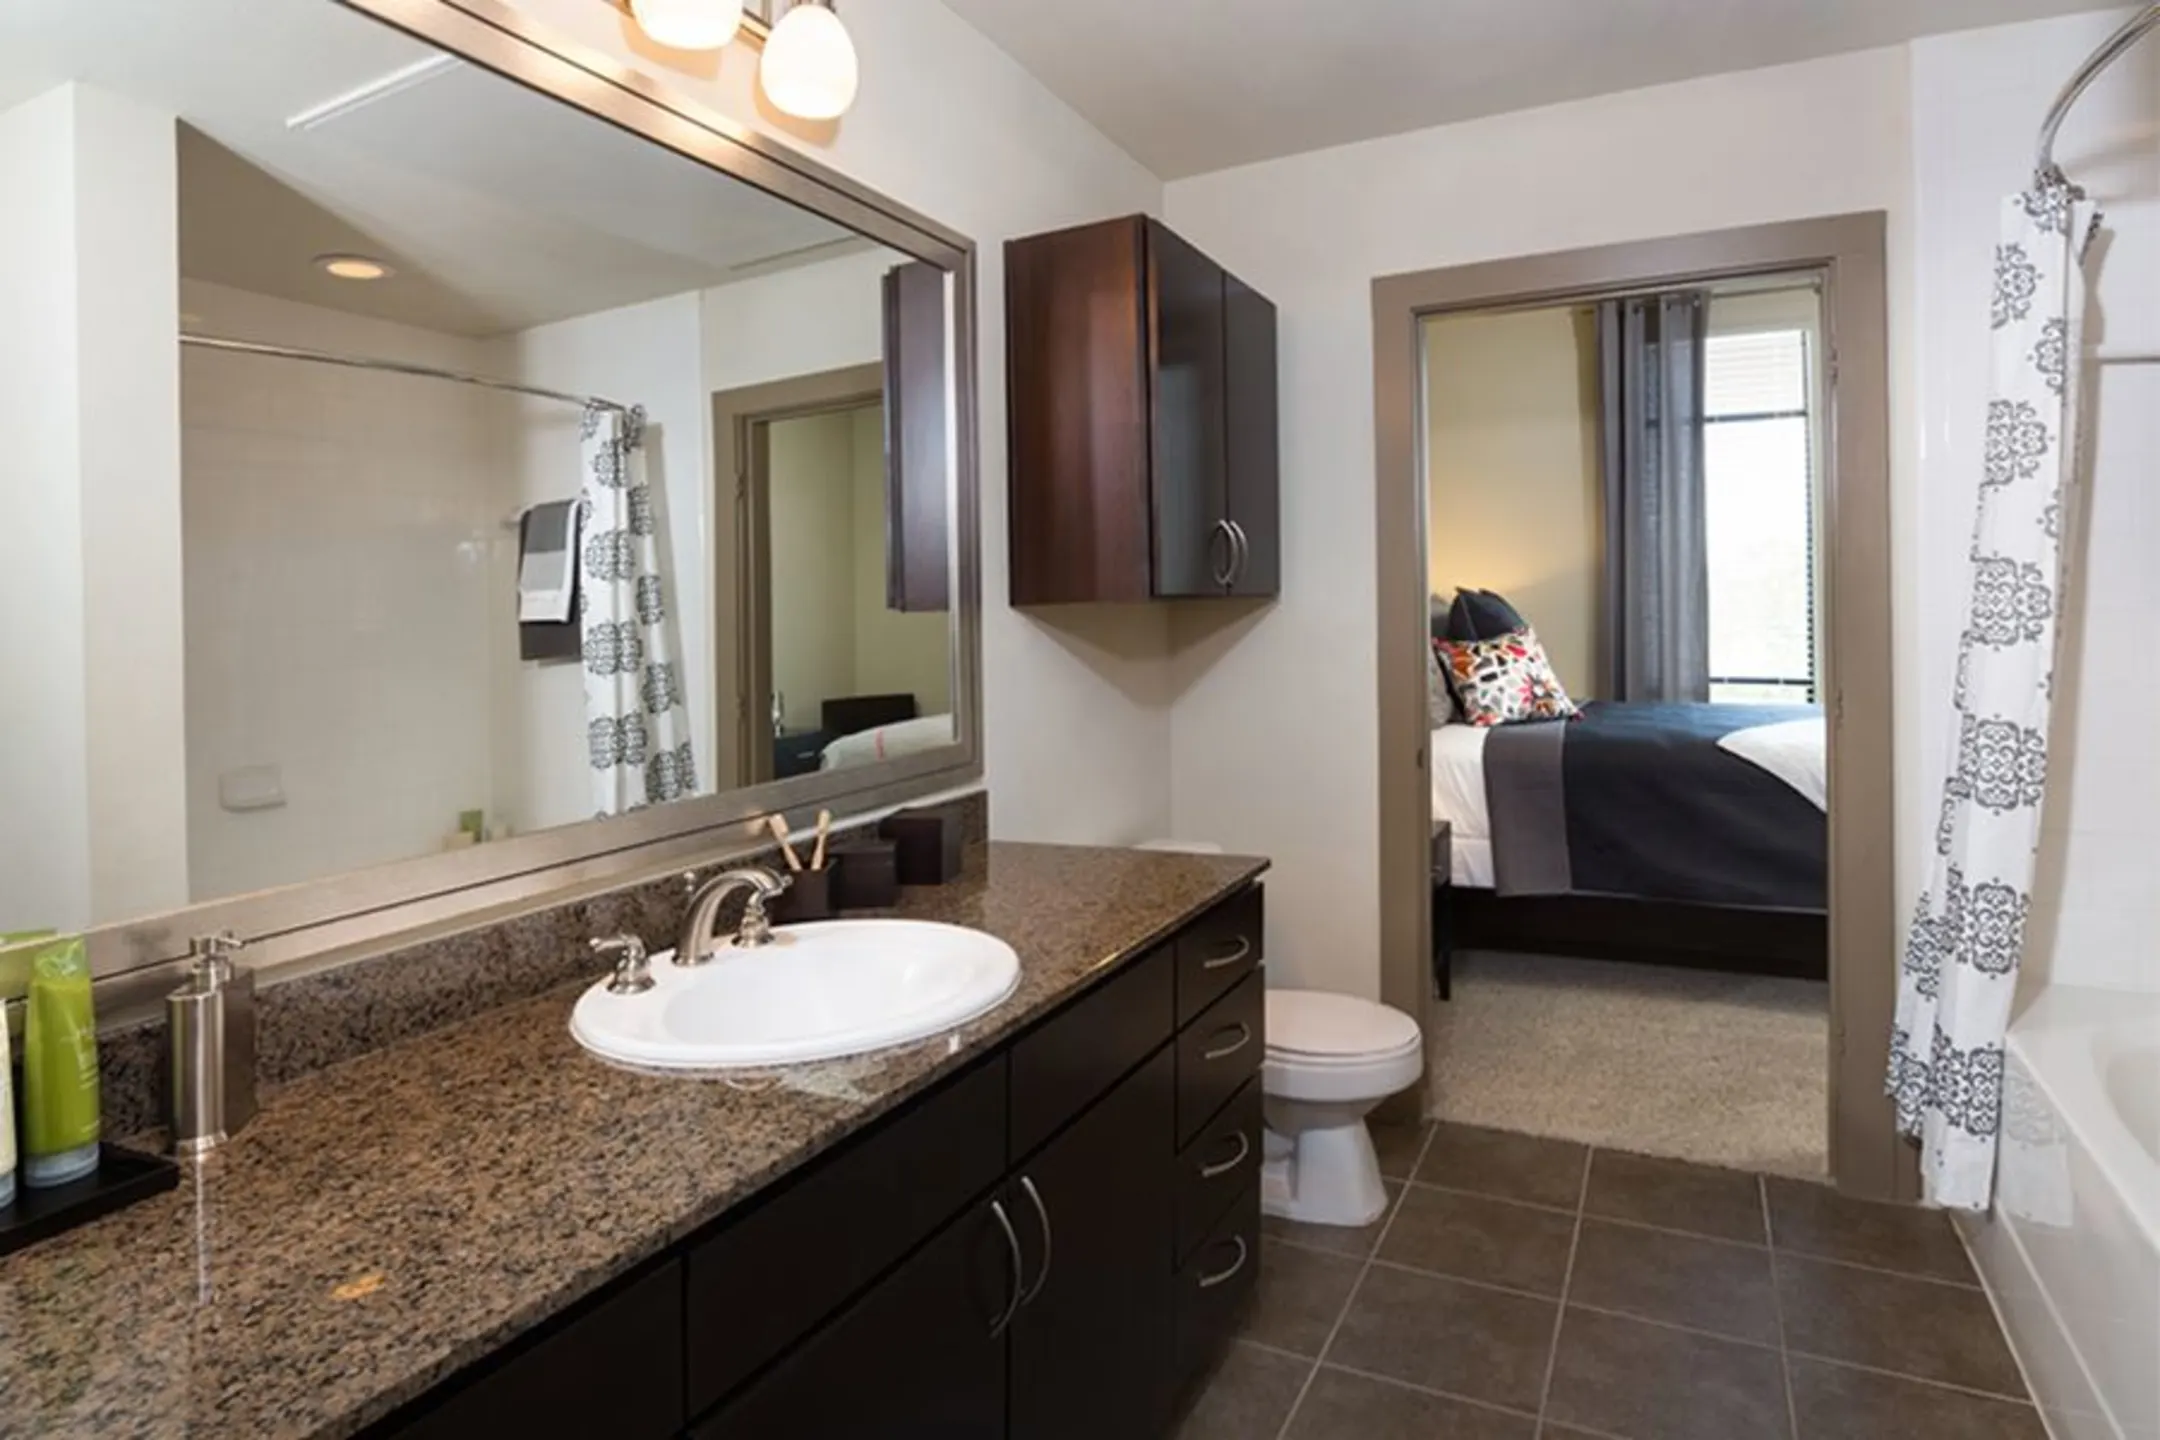 Bathroom - 77061 Luxury Properties - Houston, TX